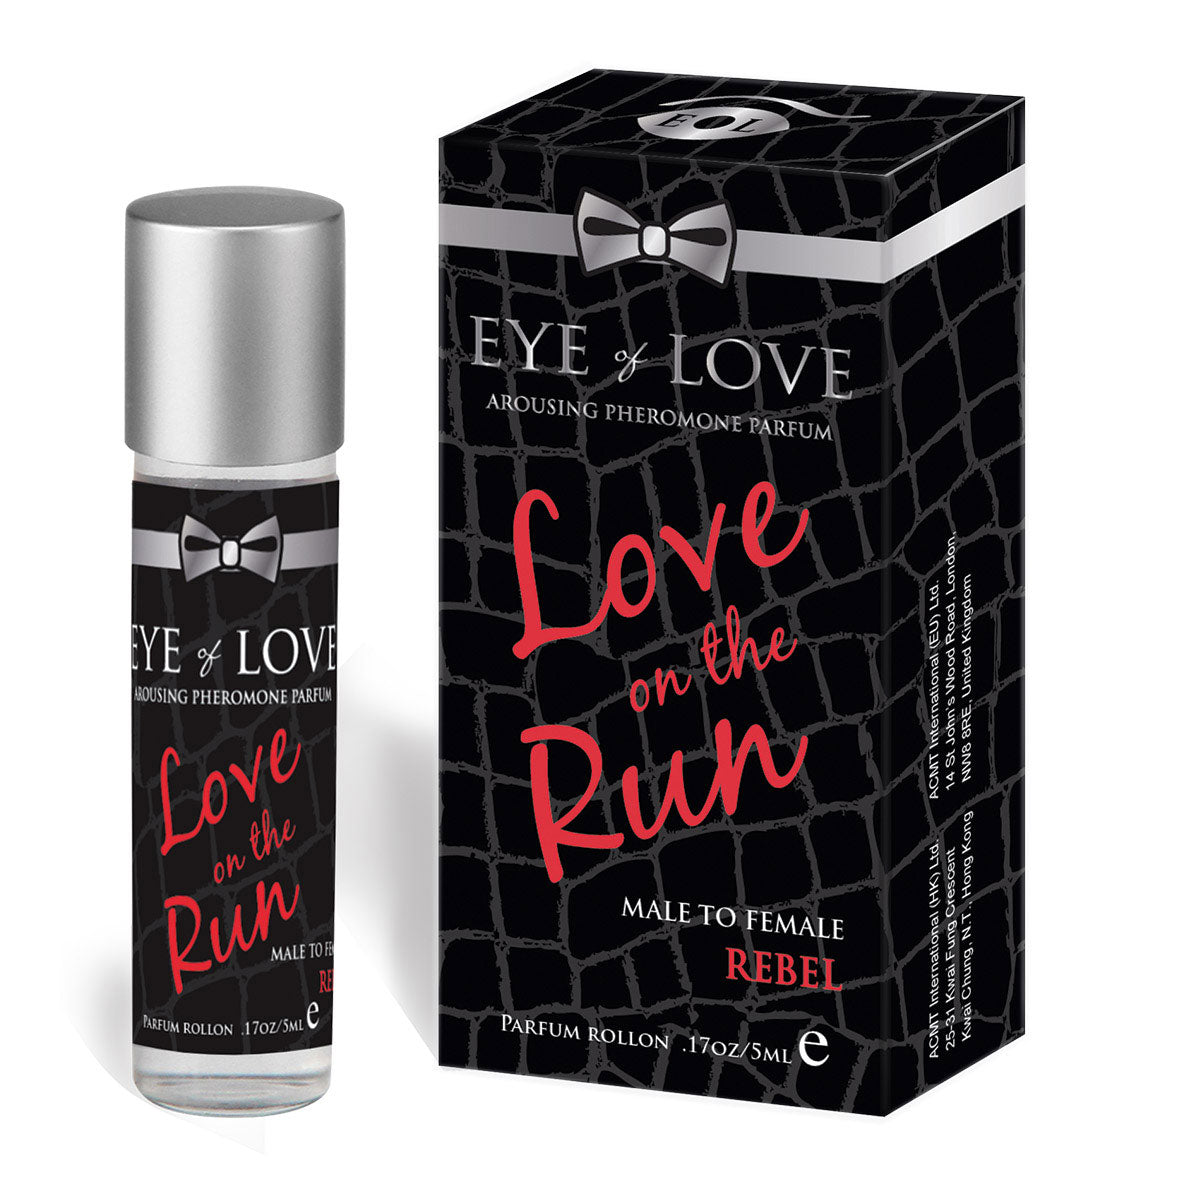 Eye of Love - Love on the Run Mini Pheromone Parfum 5ml - Rebel (M to F)